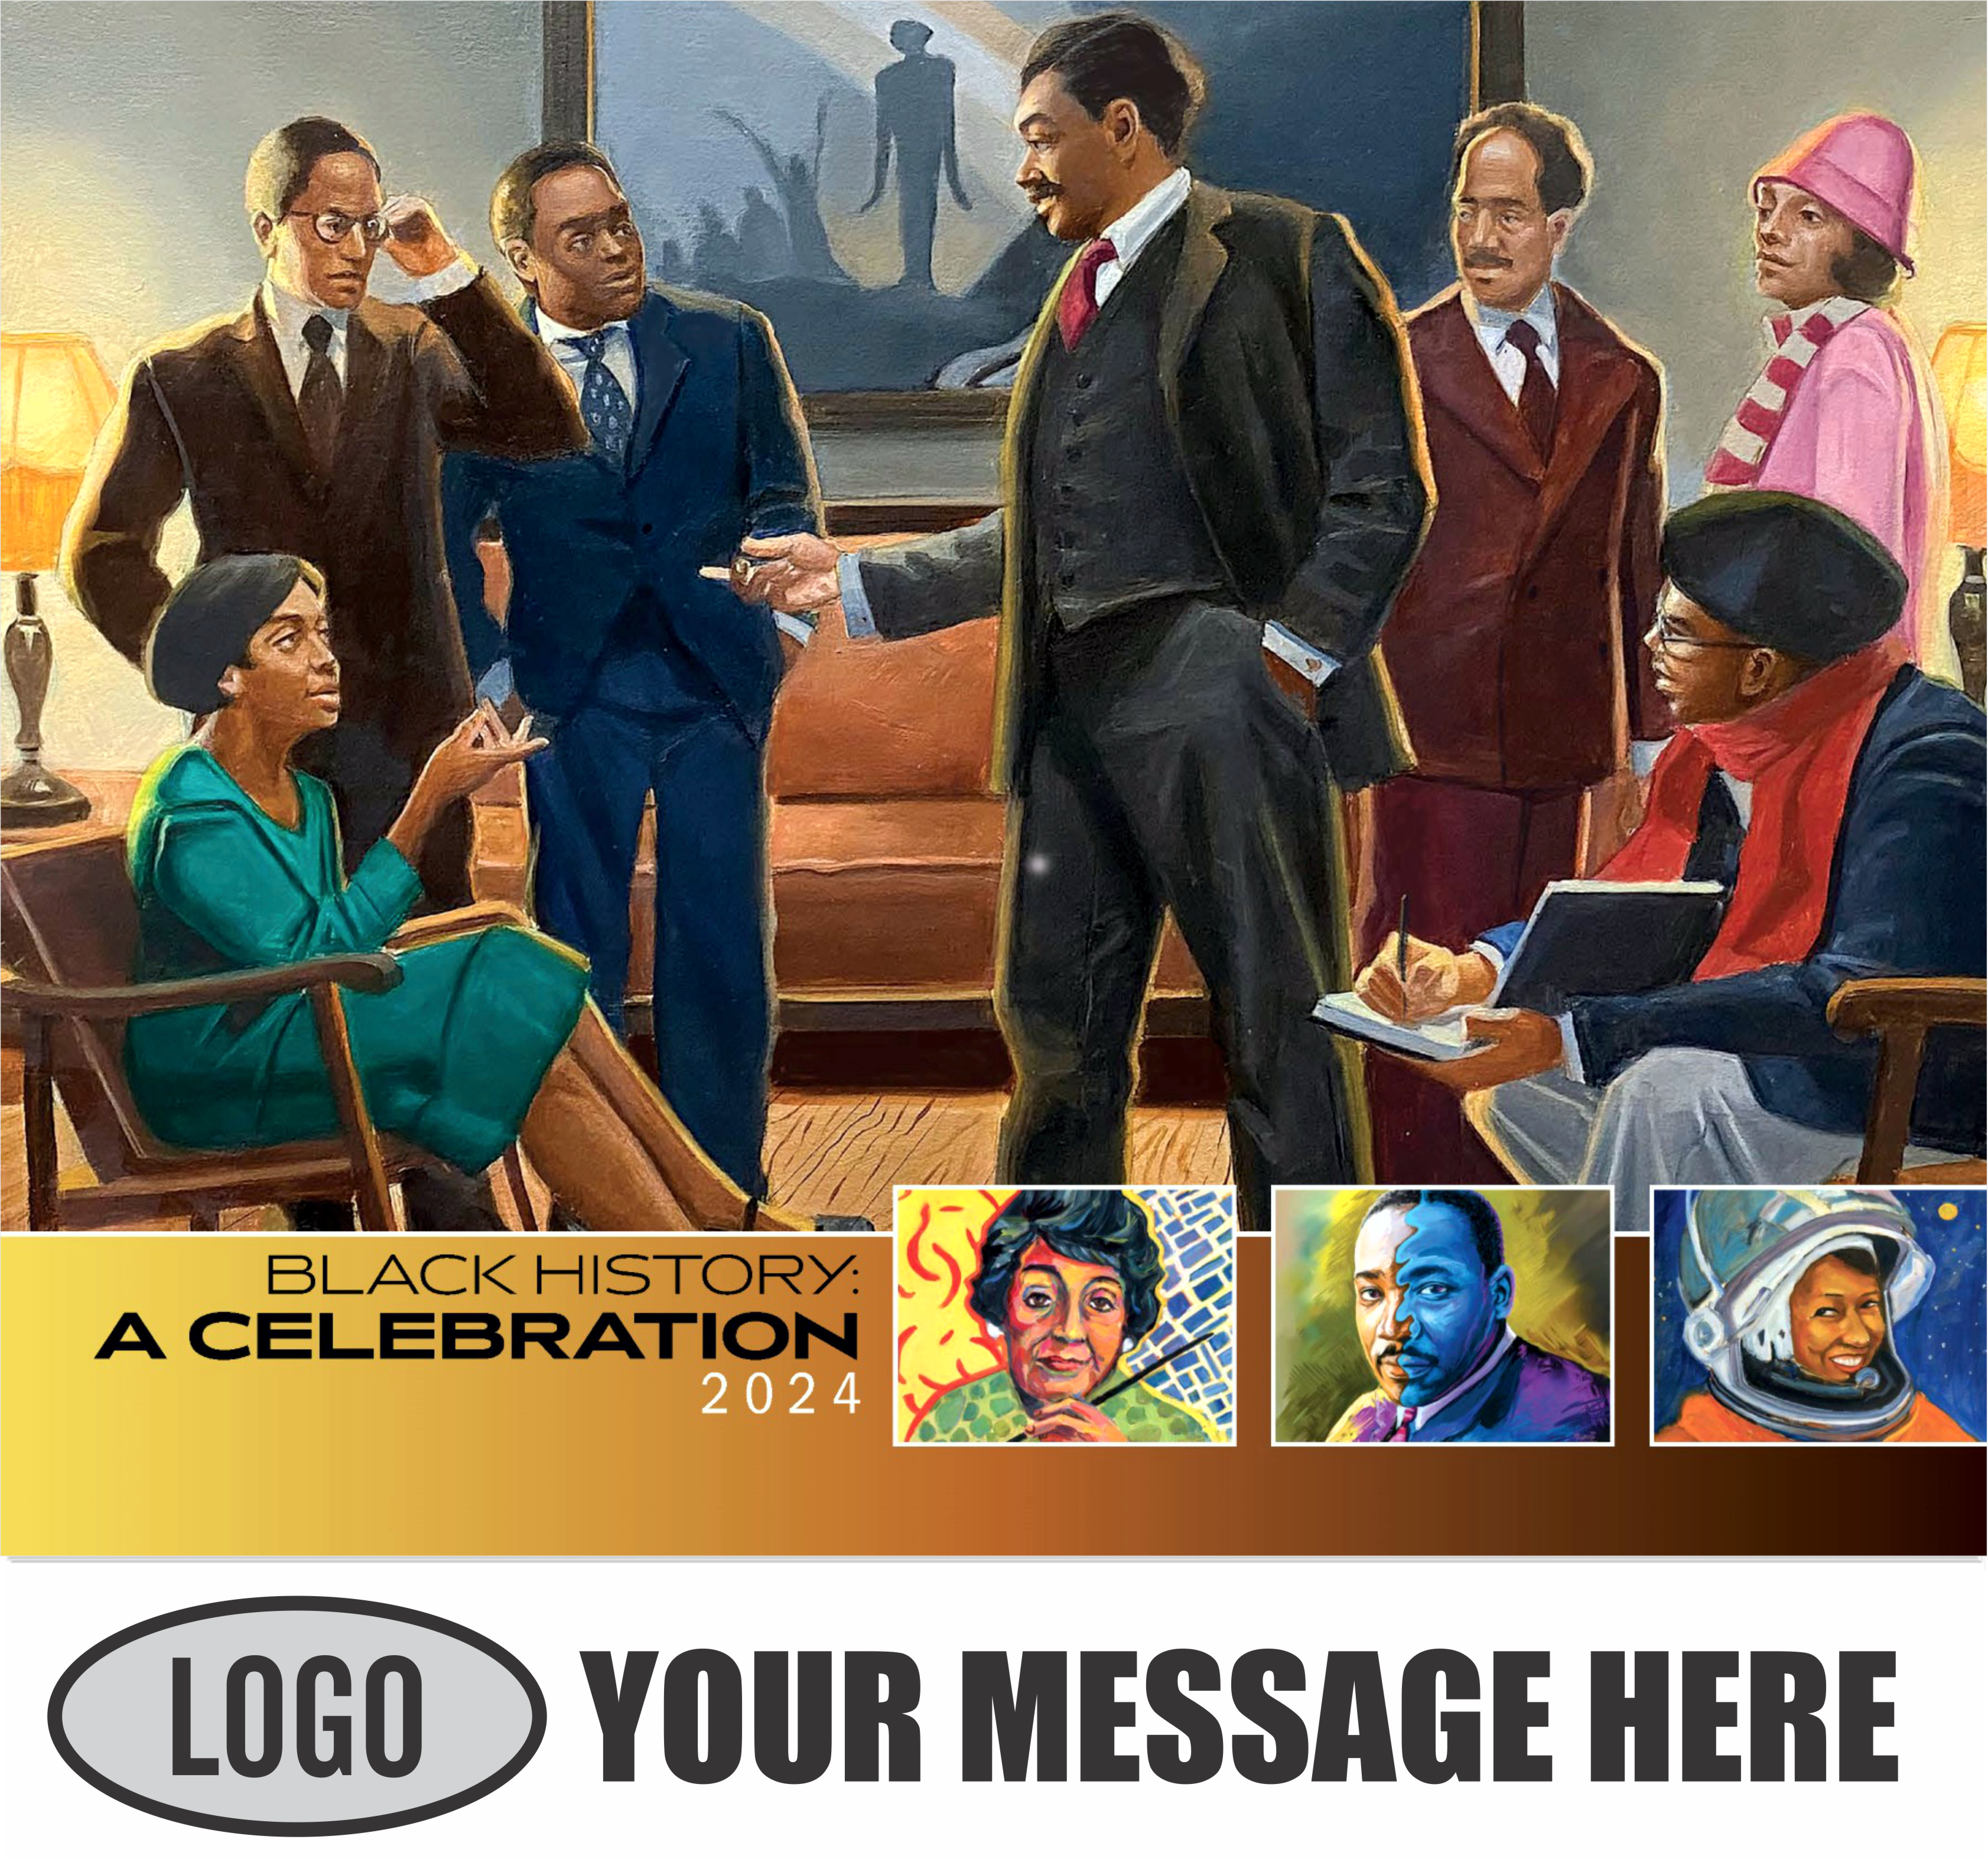 Black History 2024 Business Advertising Calendar - cover